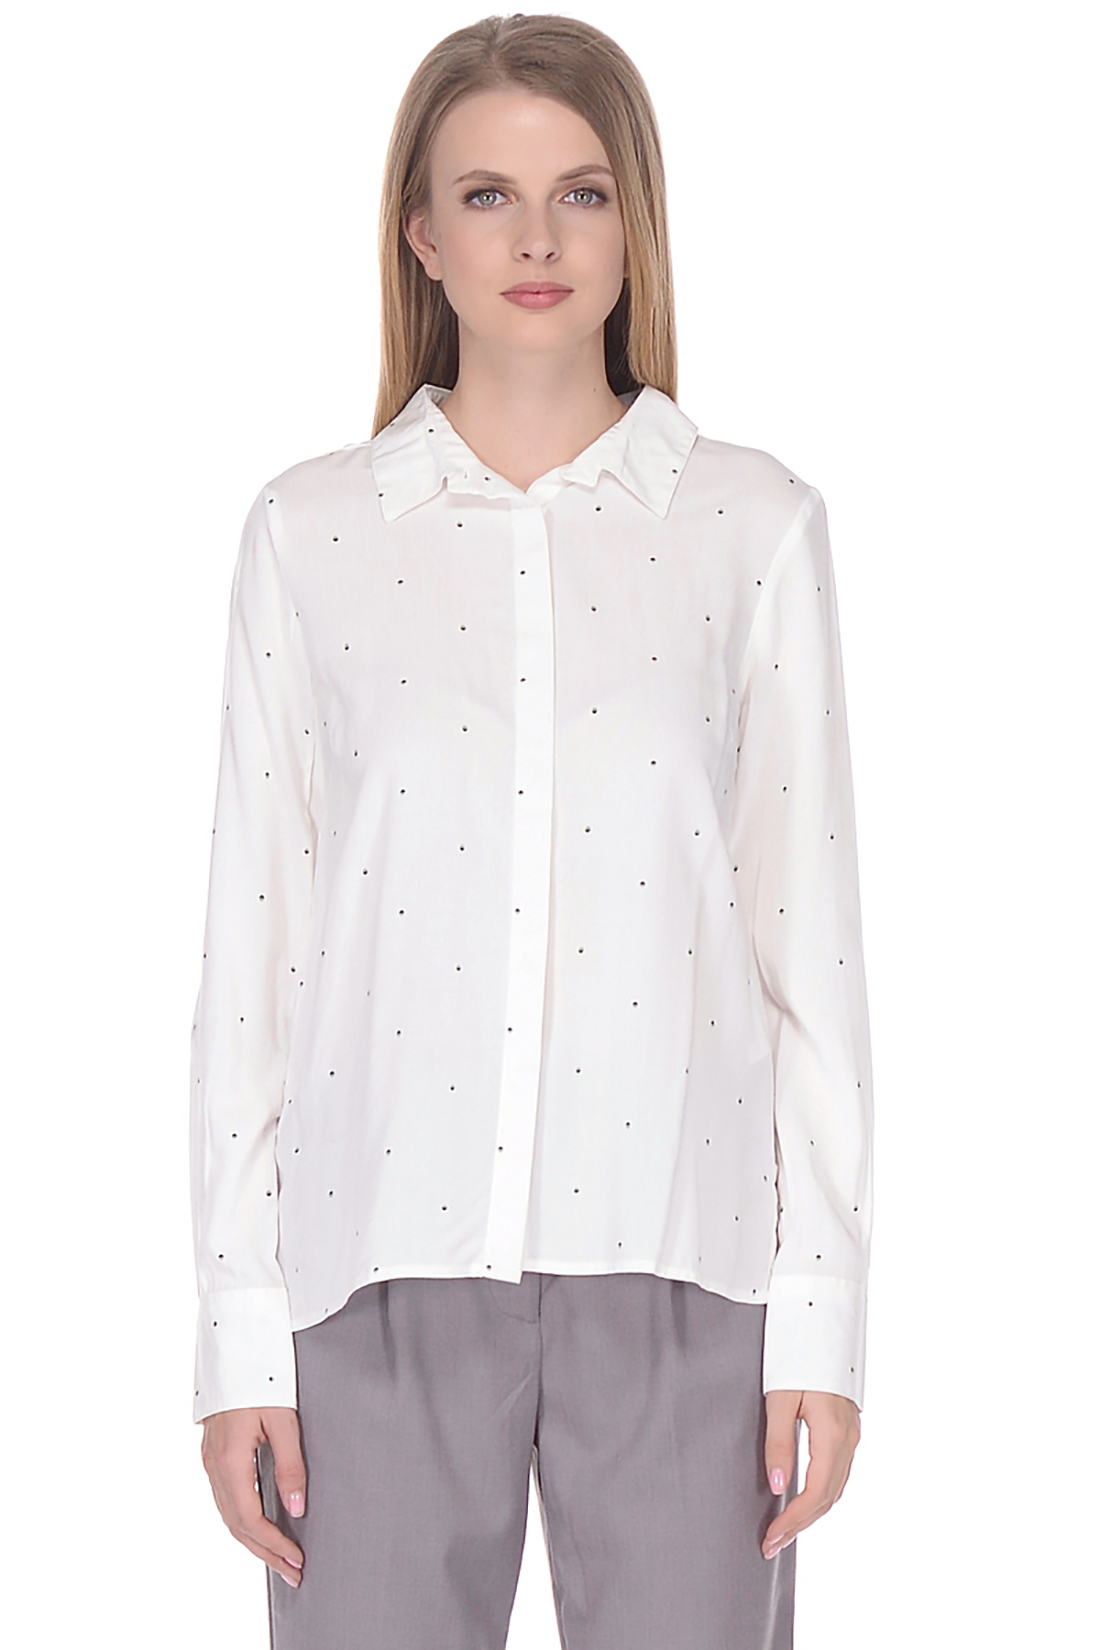 Блузка в мелкий горох (арт. baon B178056), размер XS, цвет white printed#белый Блузка в мелкий горох (арт. baon B178056) - фото 1